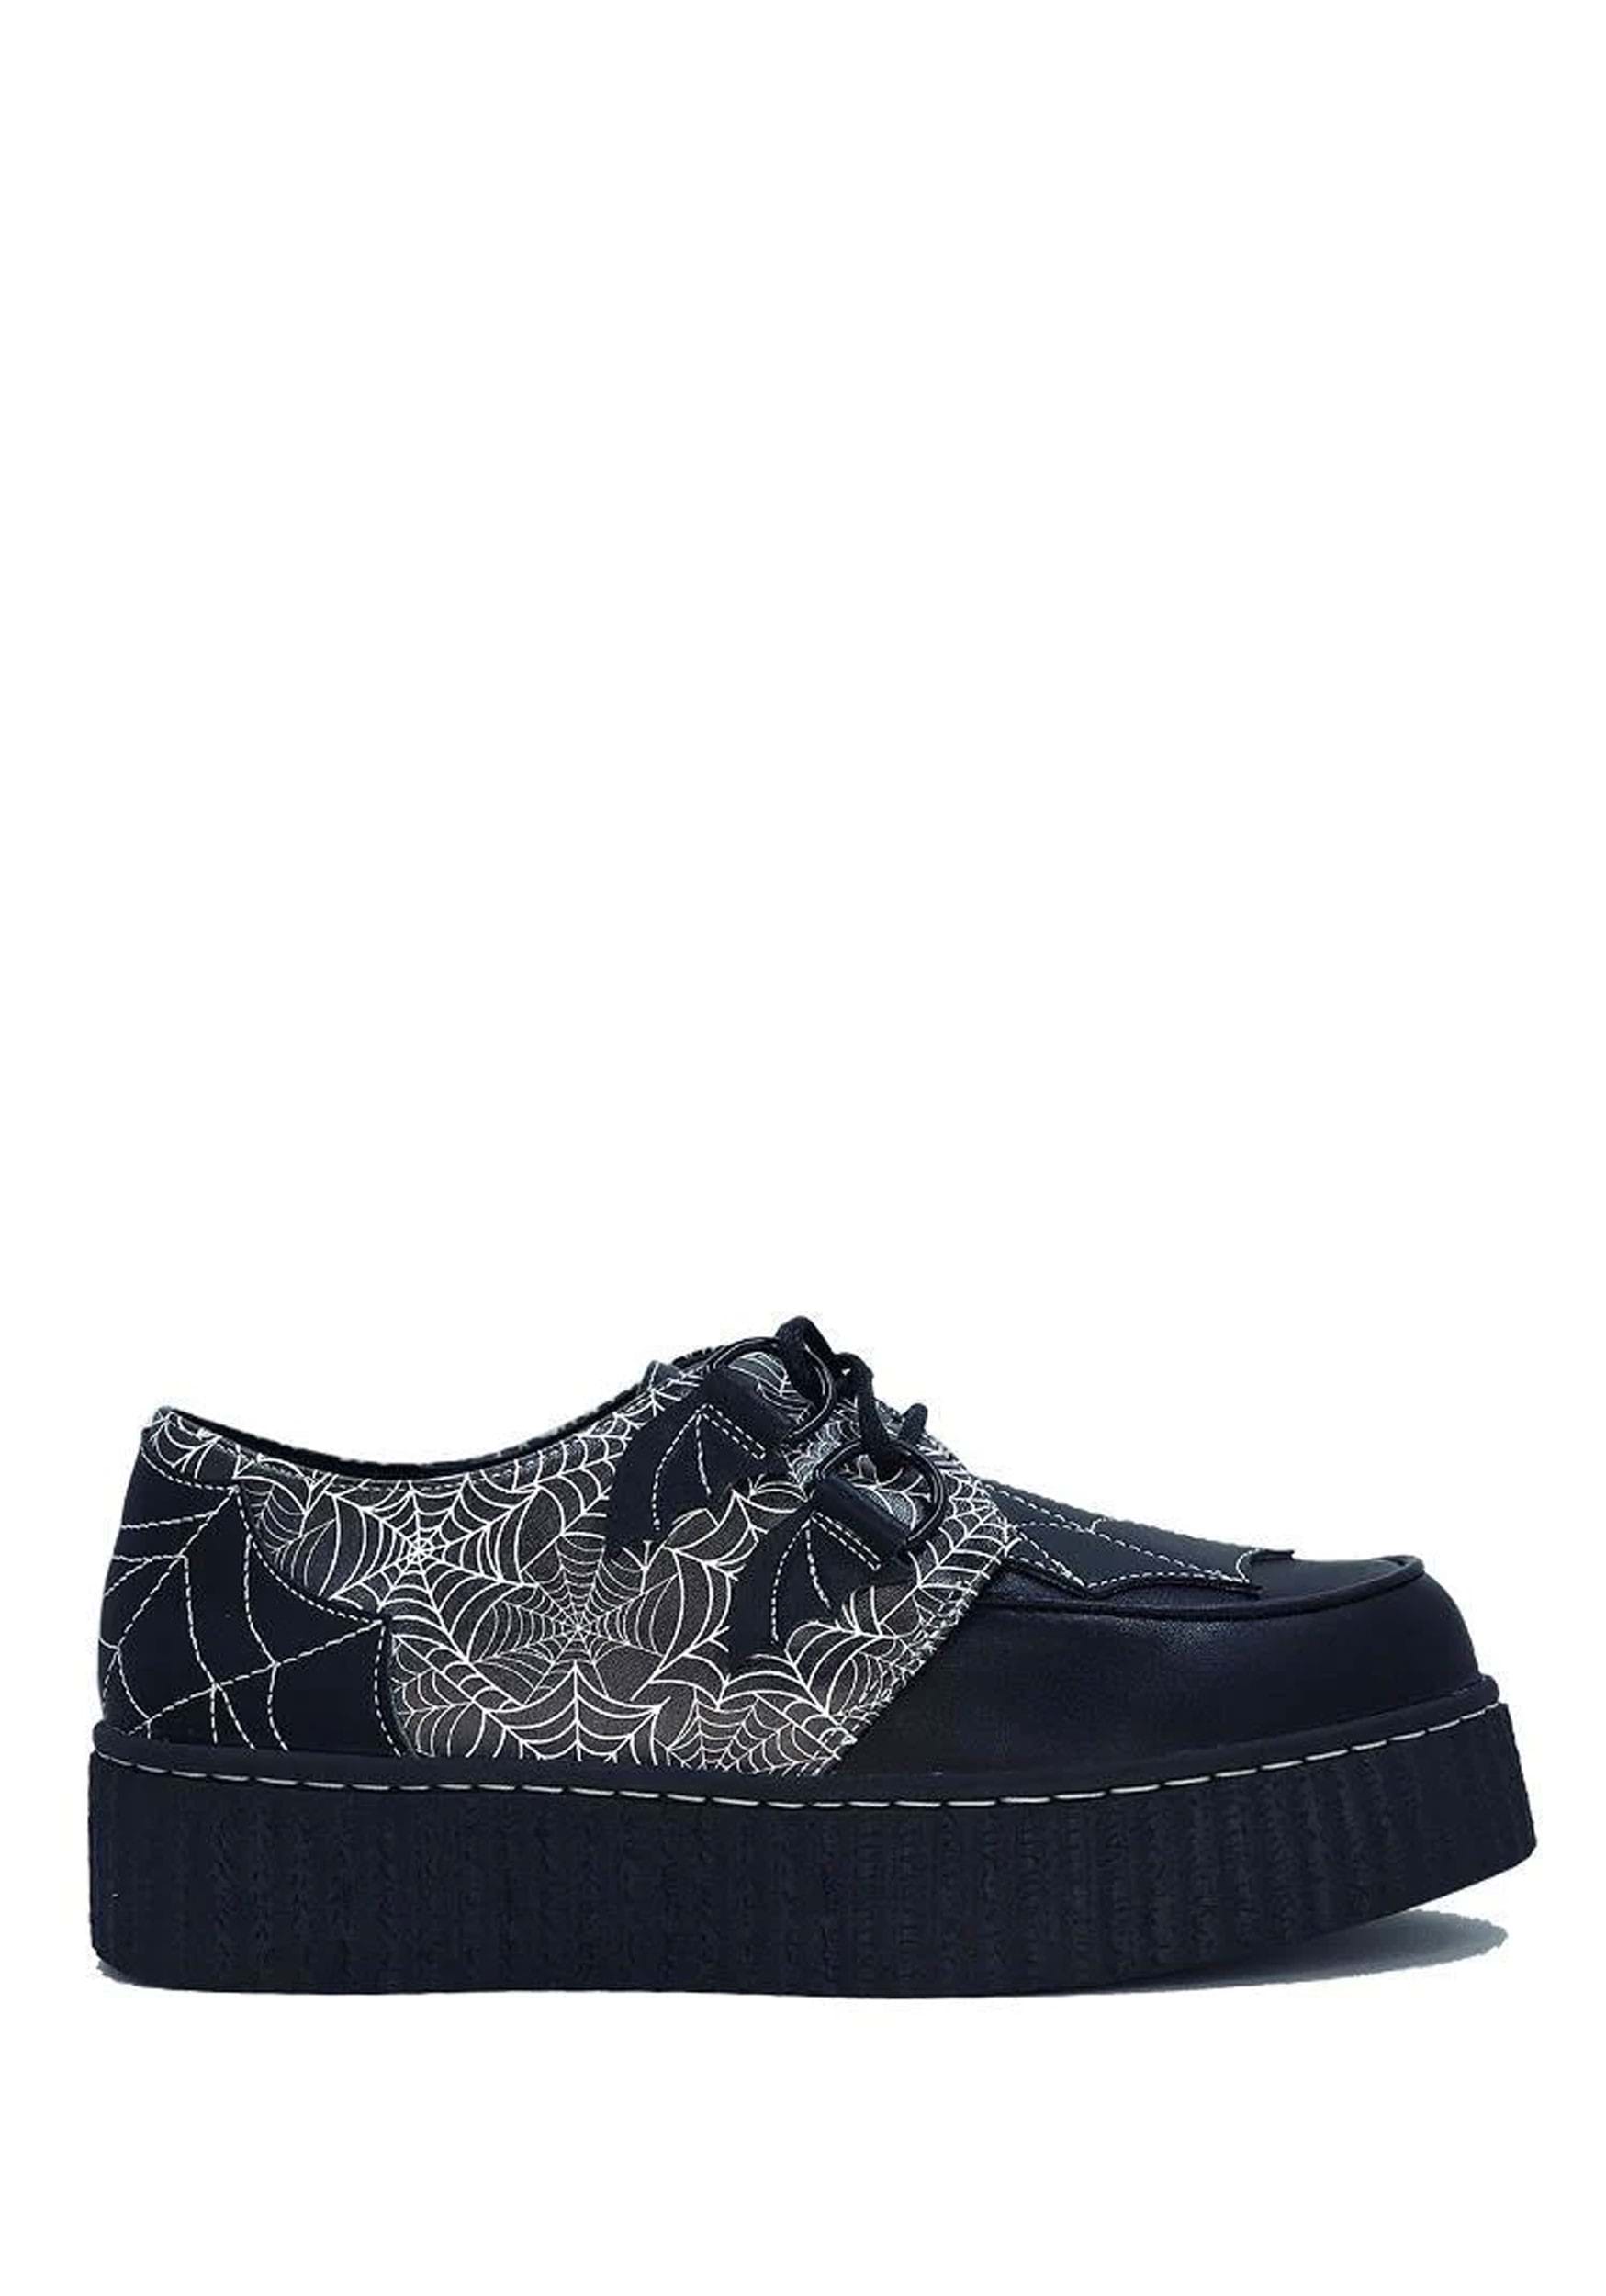 Image of Krypt Spiderweb Creeper Shoes for Women ID SVKRYPTSPIDERWEB-BK-7